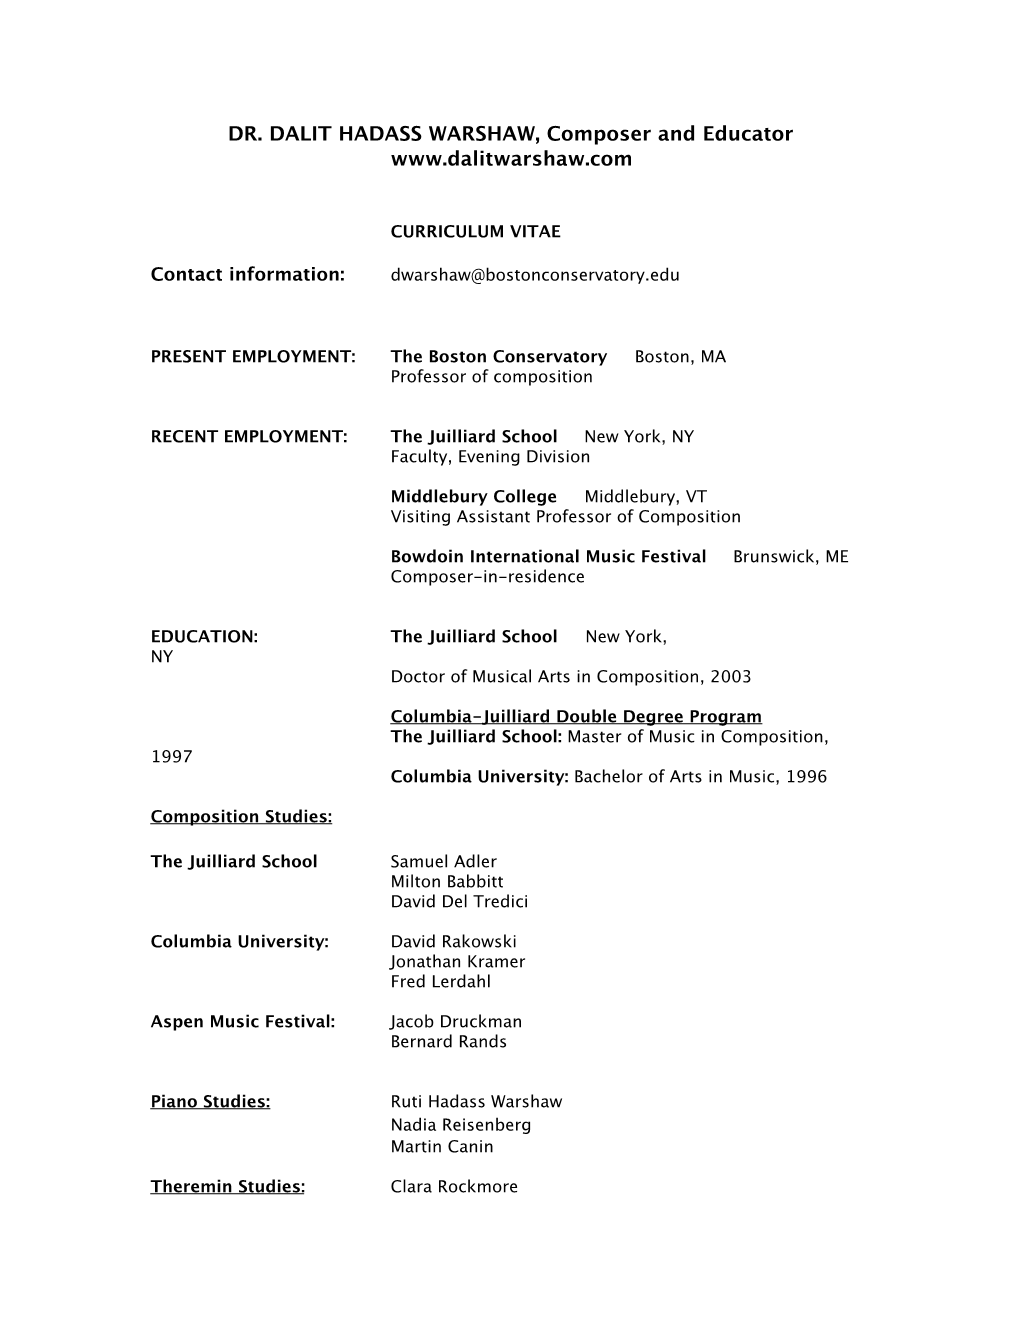 DALIT WARSHAW Academic CV 2012-2